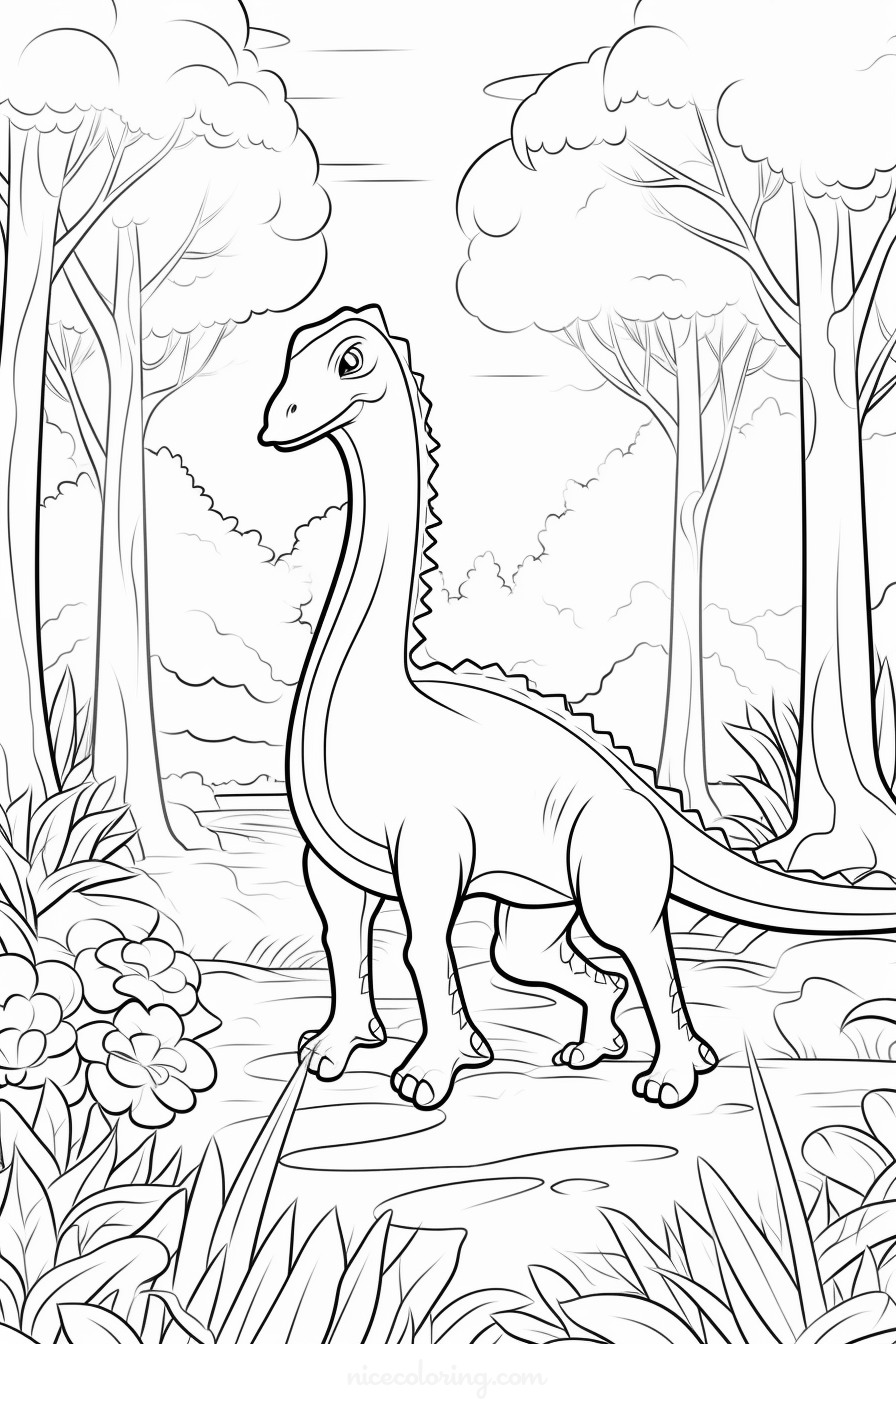 Tyrannosaurus Rex dinosaur coloring